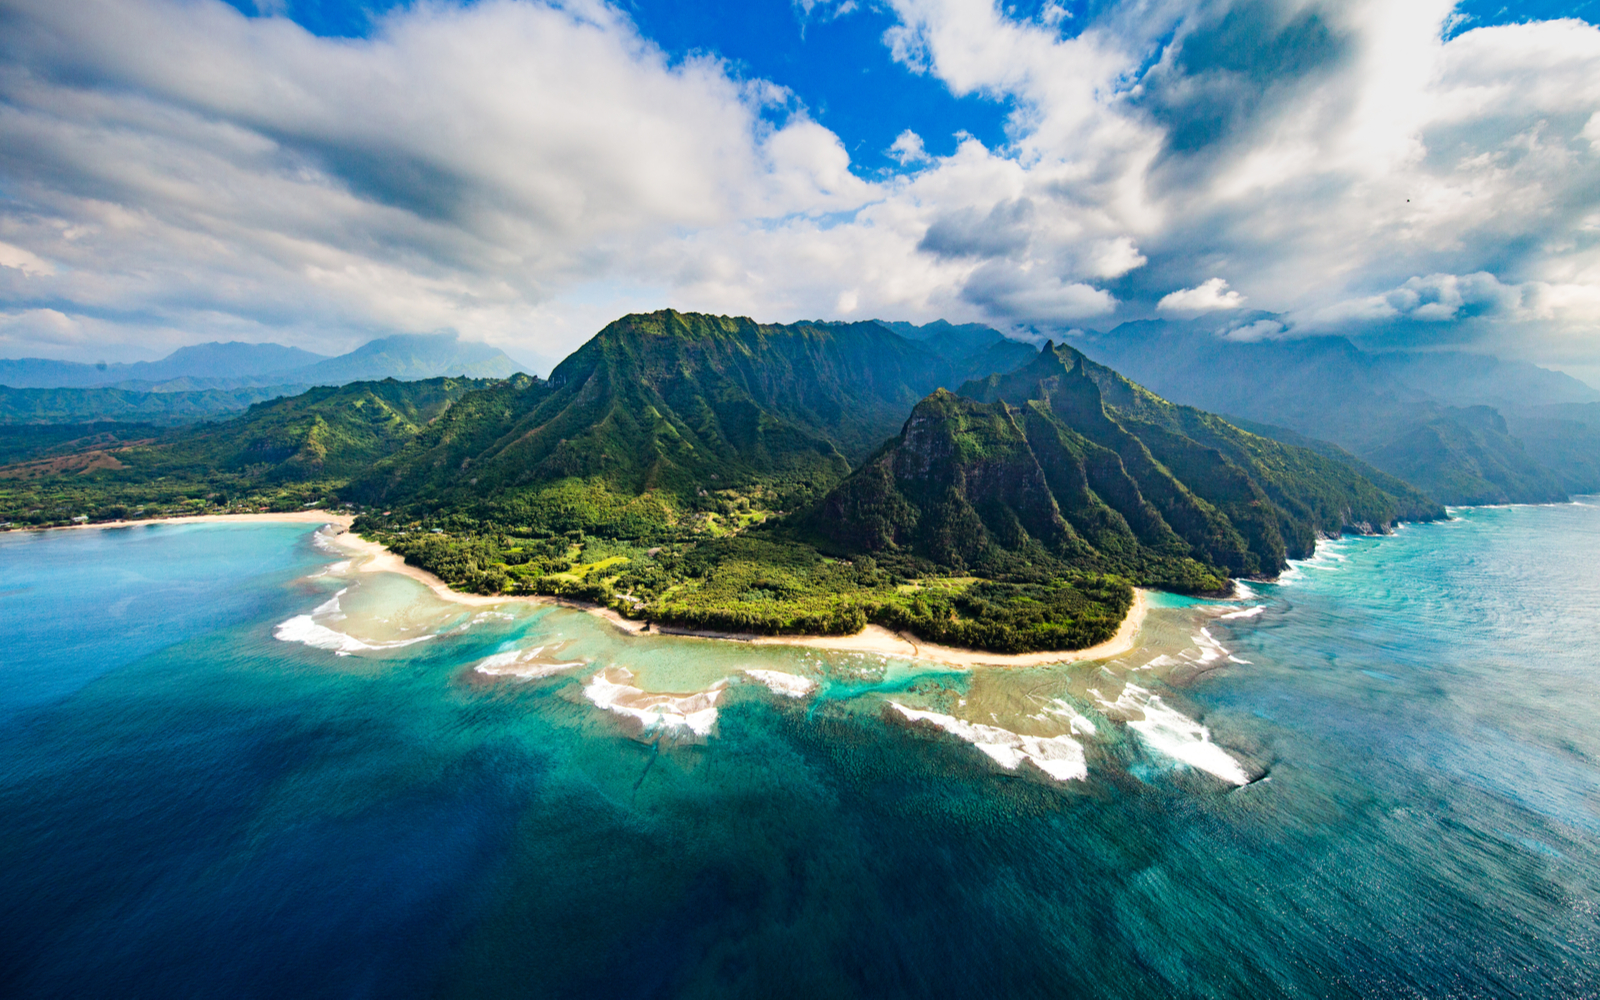 Is Hawaii Safe? | Travel Tips & Safety Concerns